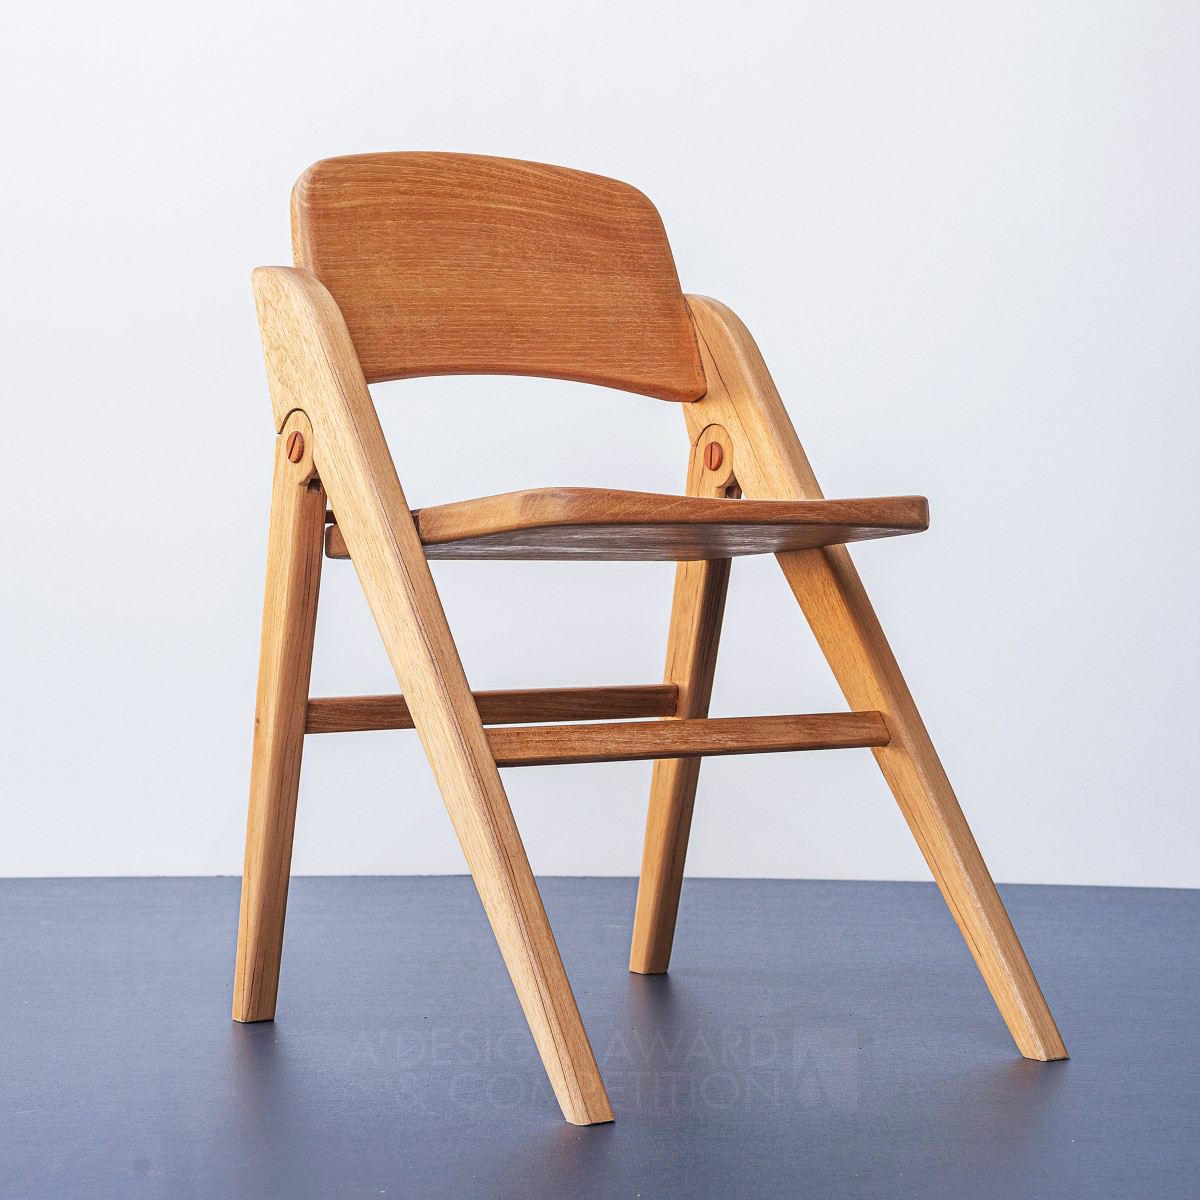 Rodrigo Berlim wins Bronze at the prestigious A' Furniture Design Award with Velga Folding Chair.